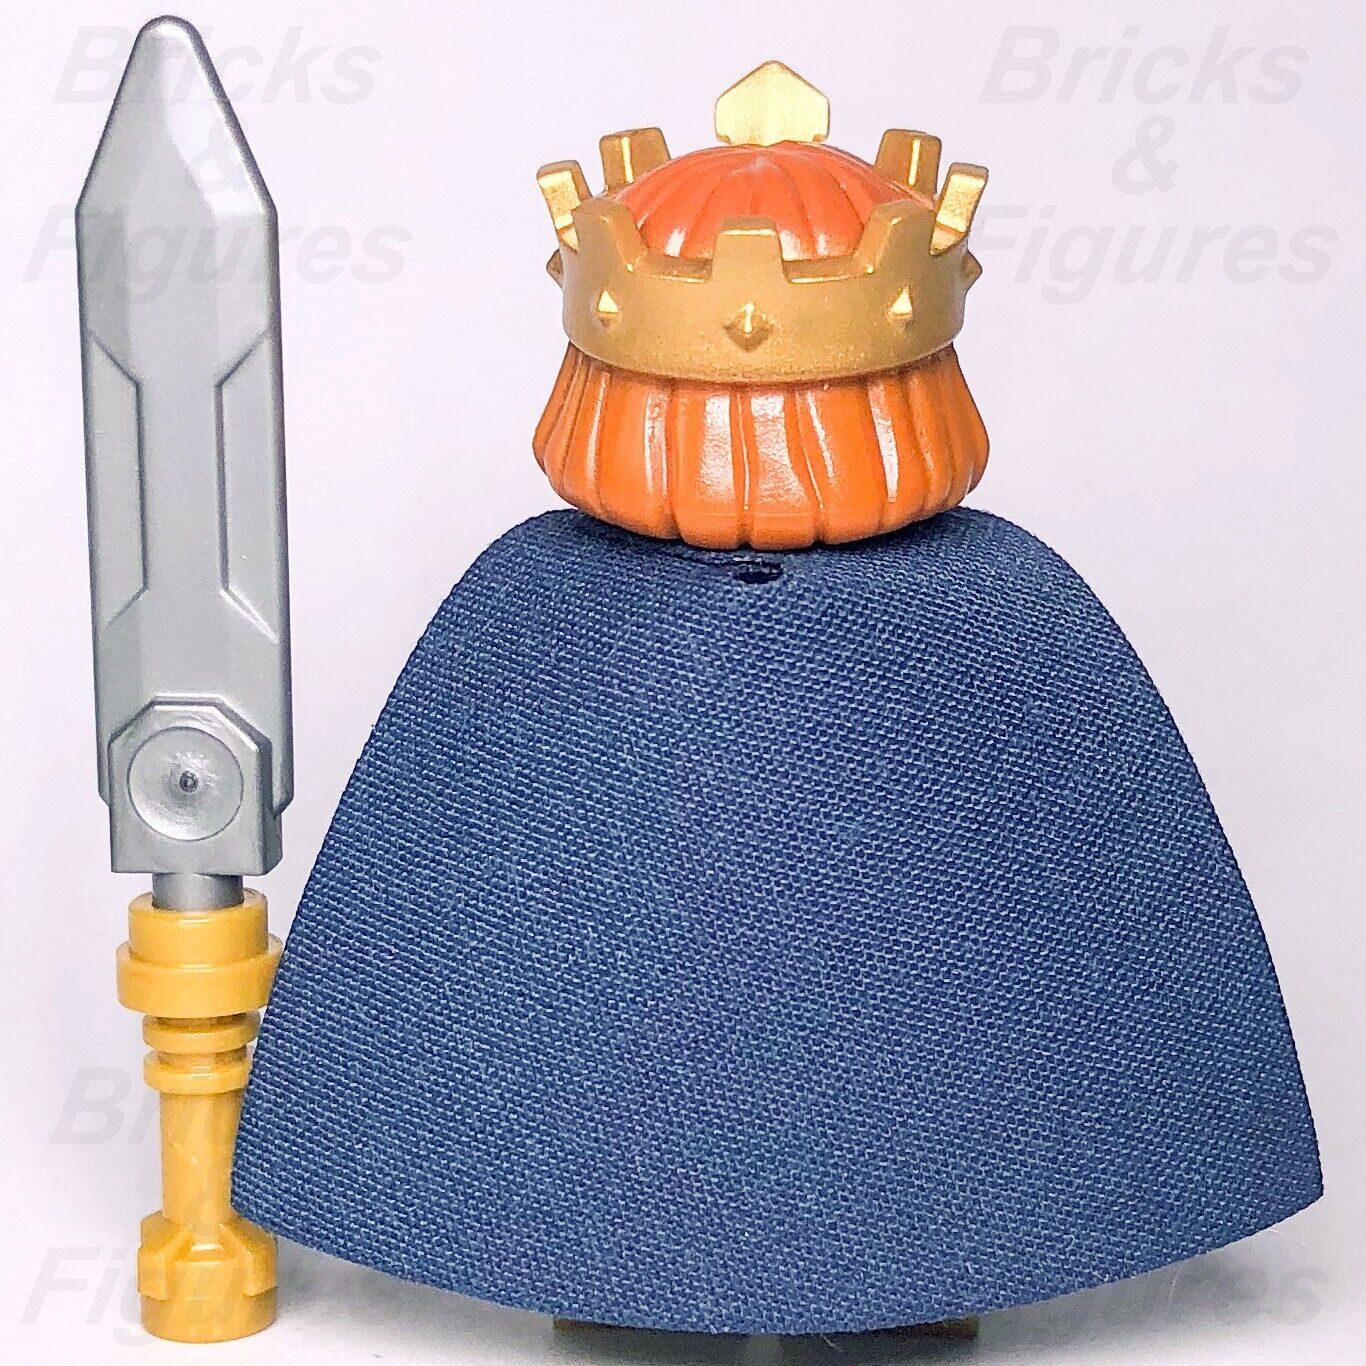 LEGO Nexo Knights King Halbert Minifigure Crown & Beard 70327 nexo014 Minifig 3